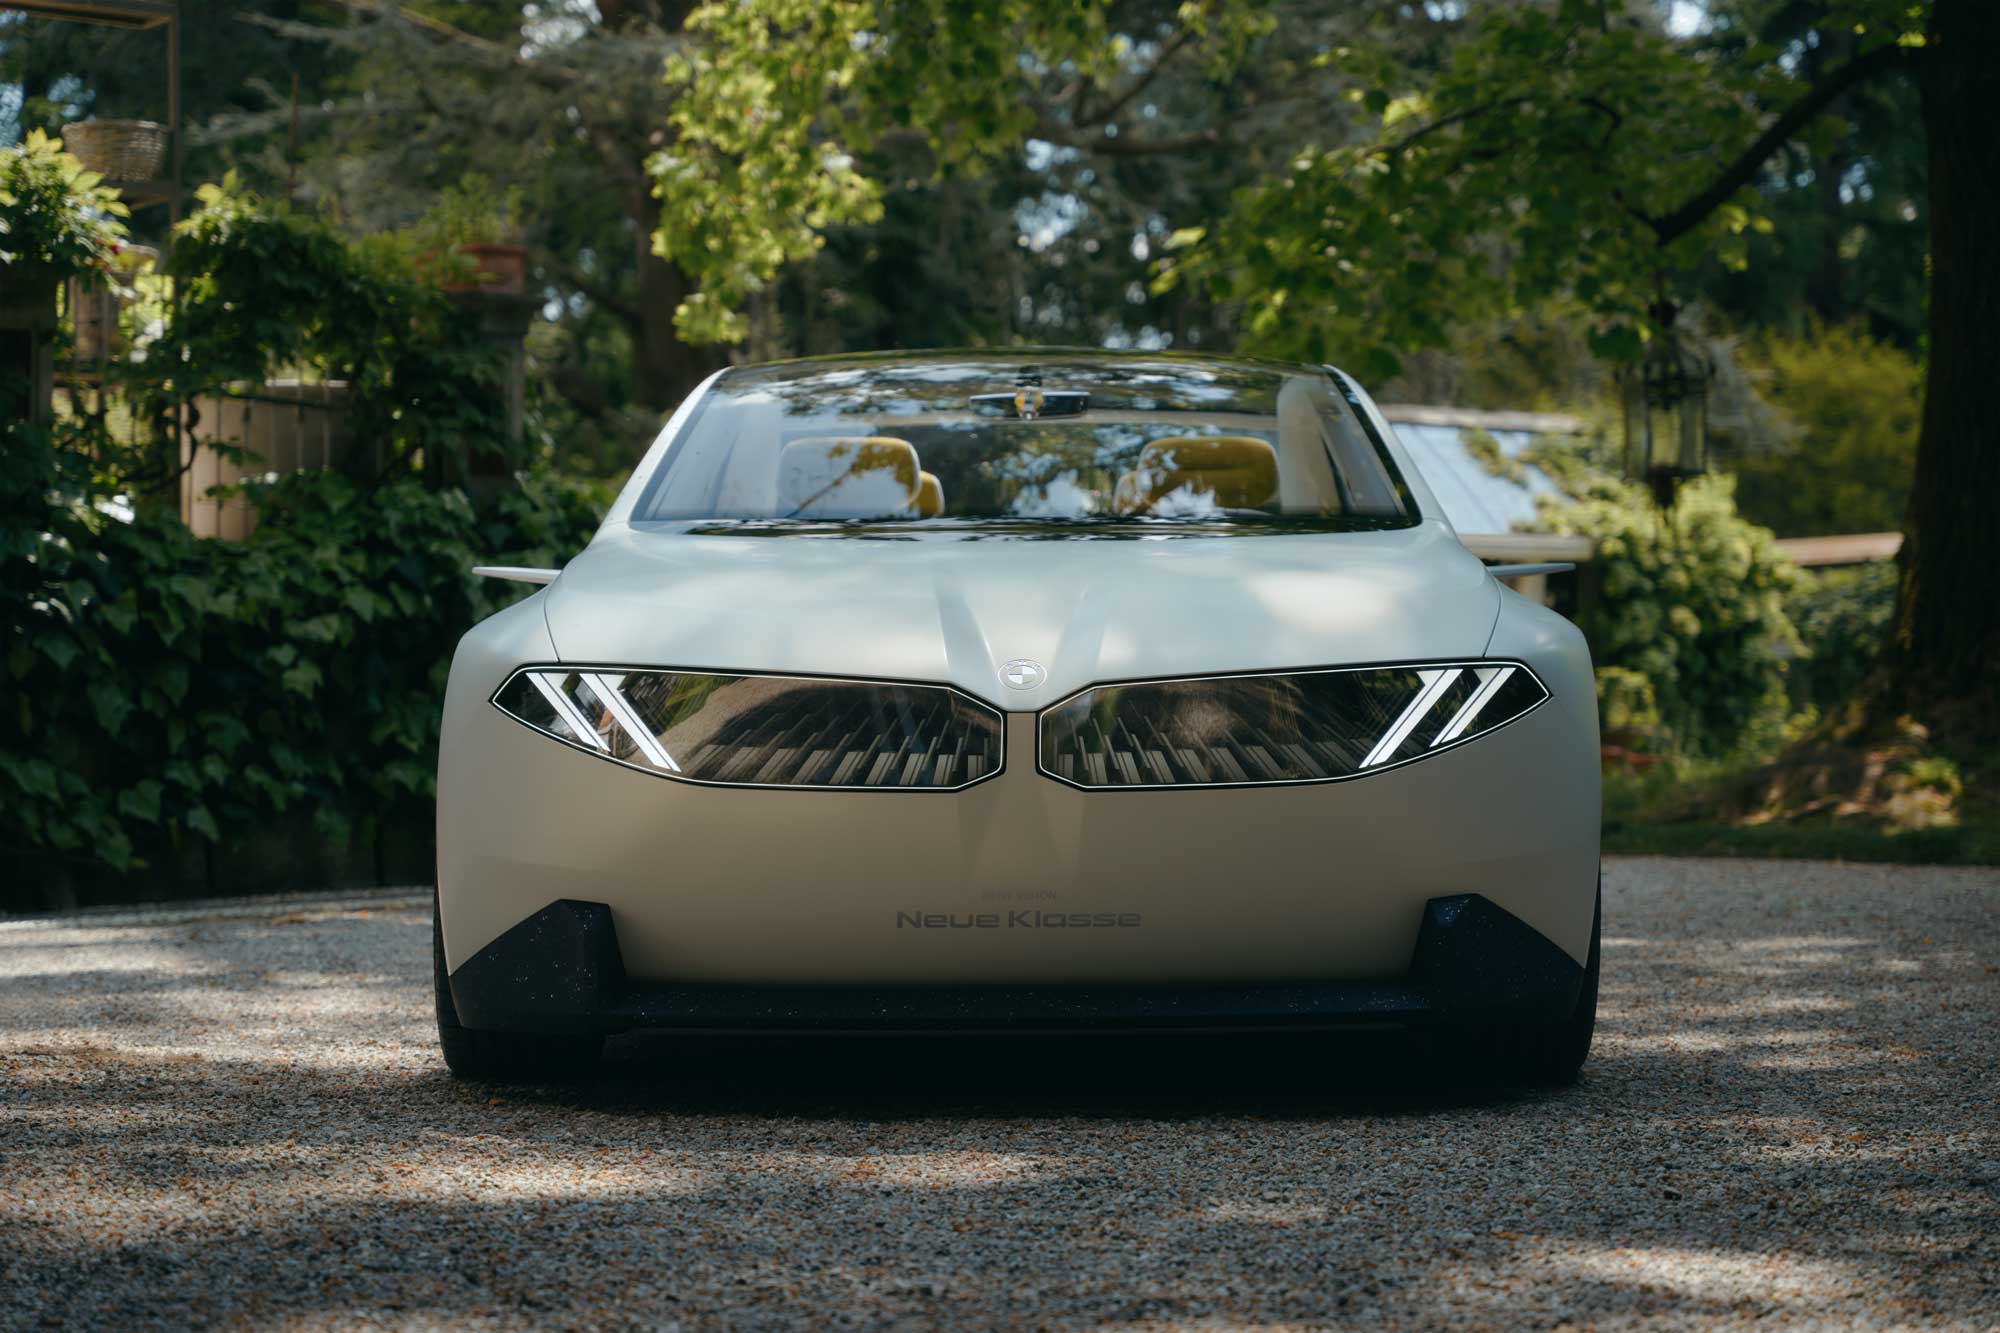 BMW New Class concept car